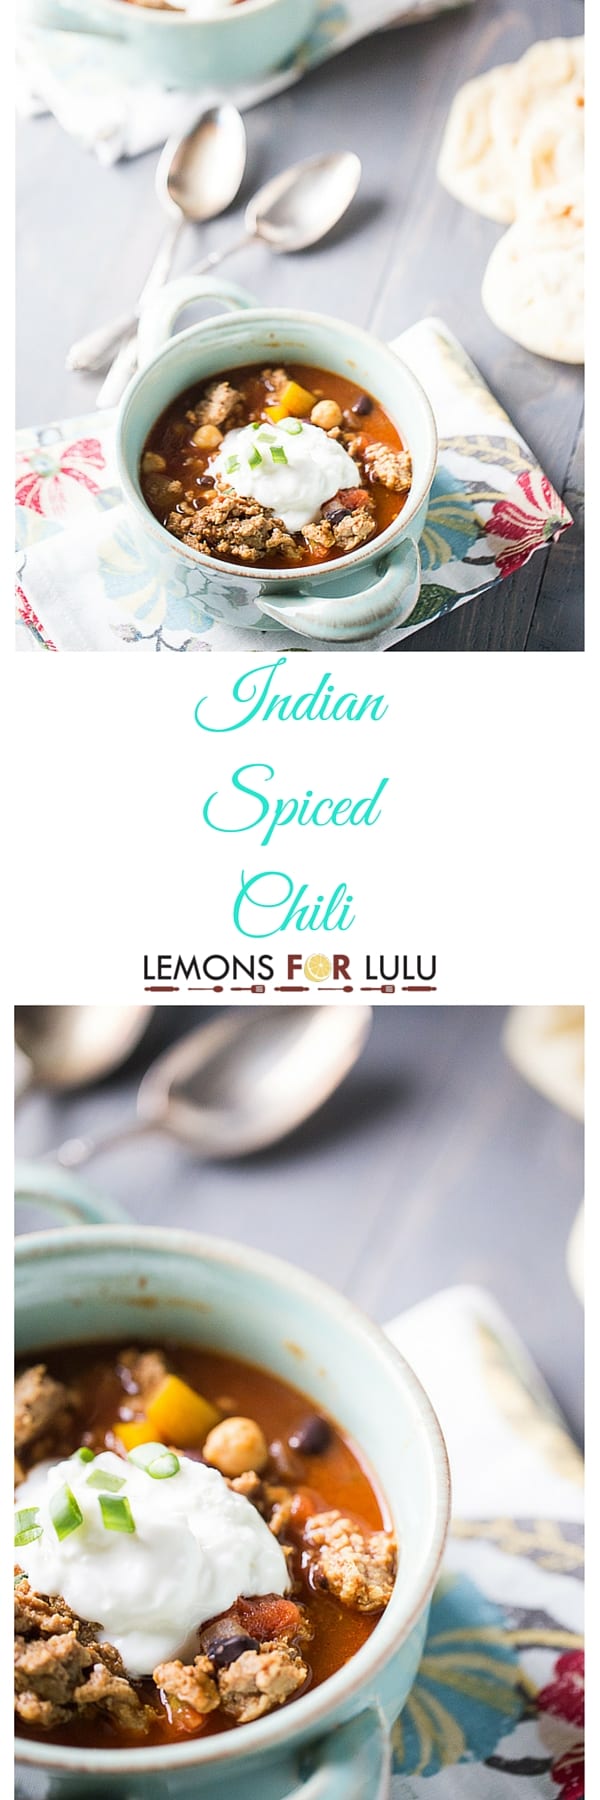 Indian Spice Quick Chili Recipe - LemonsforLulu.com